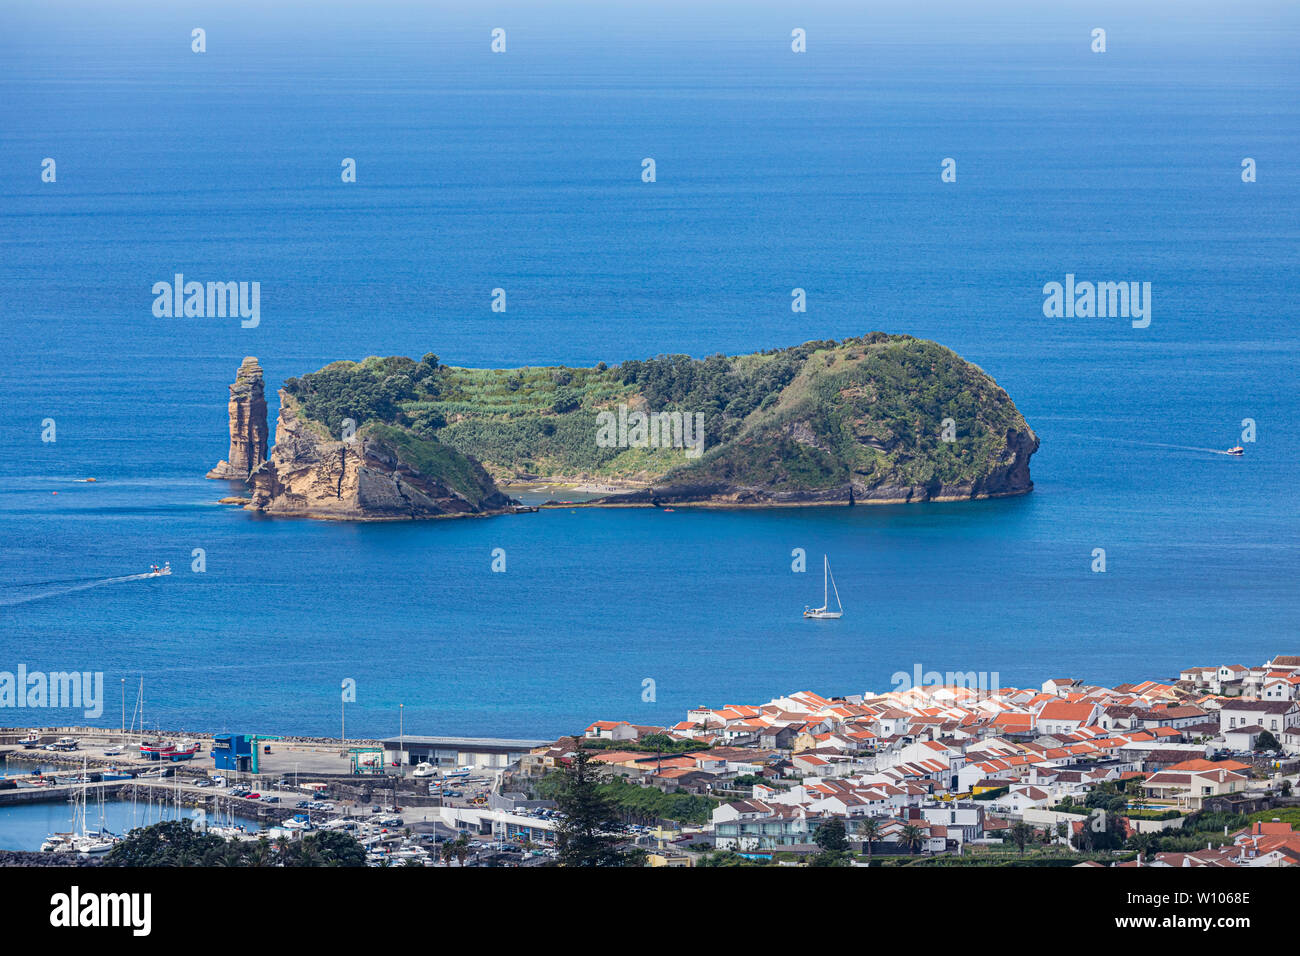 View from the mountains of Vila Franca do Campo, Sao Miguel island, Azores archipelago, Portugal Stock Photo